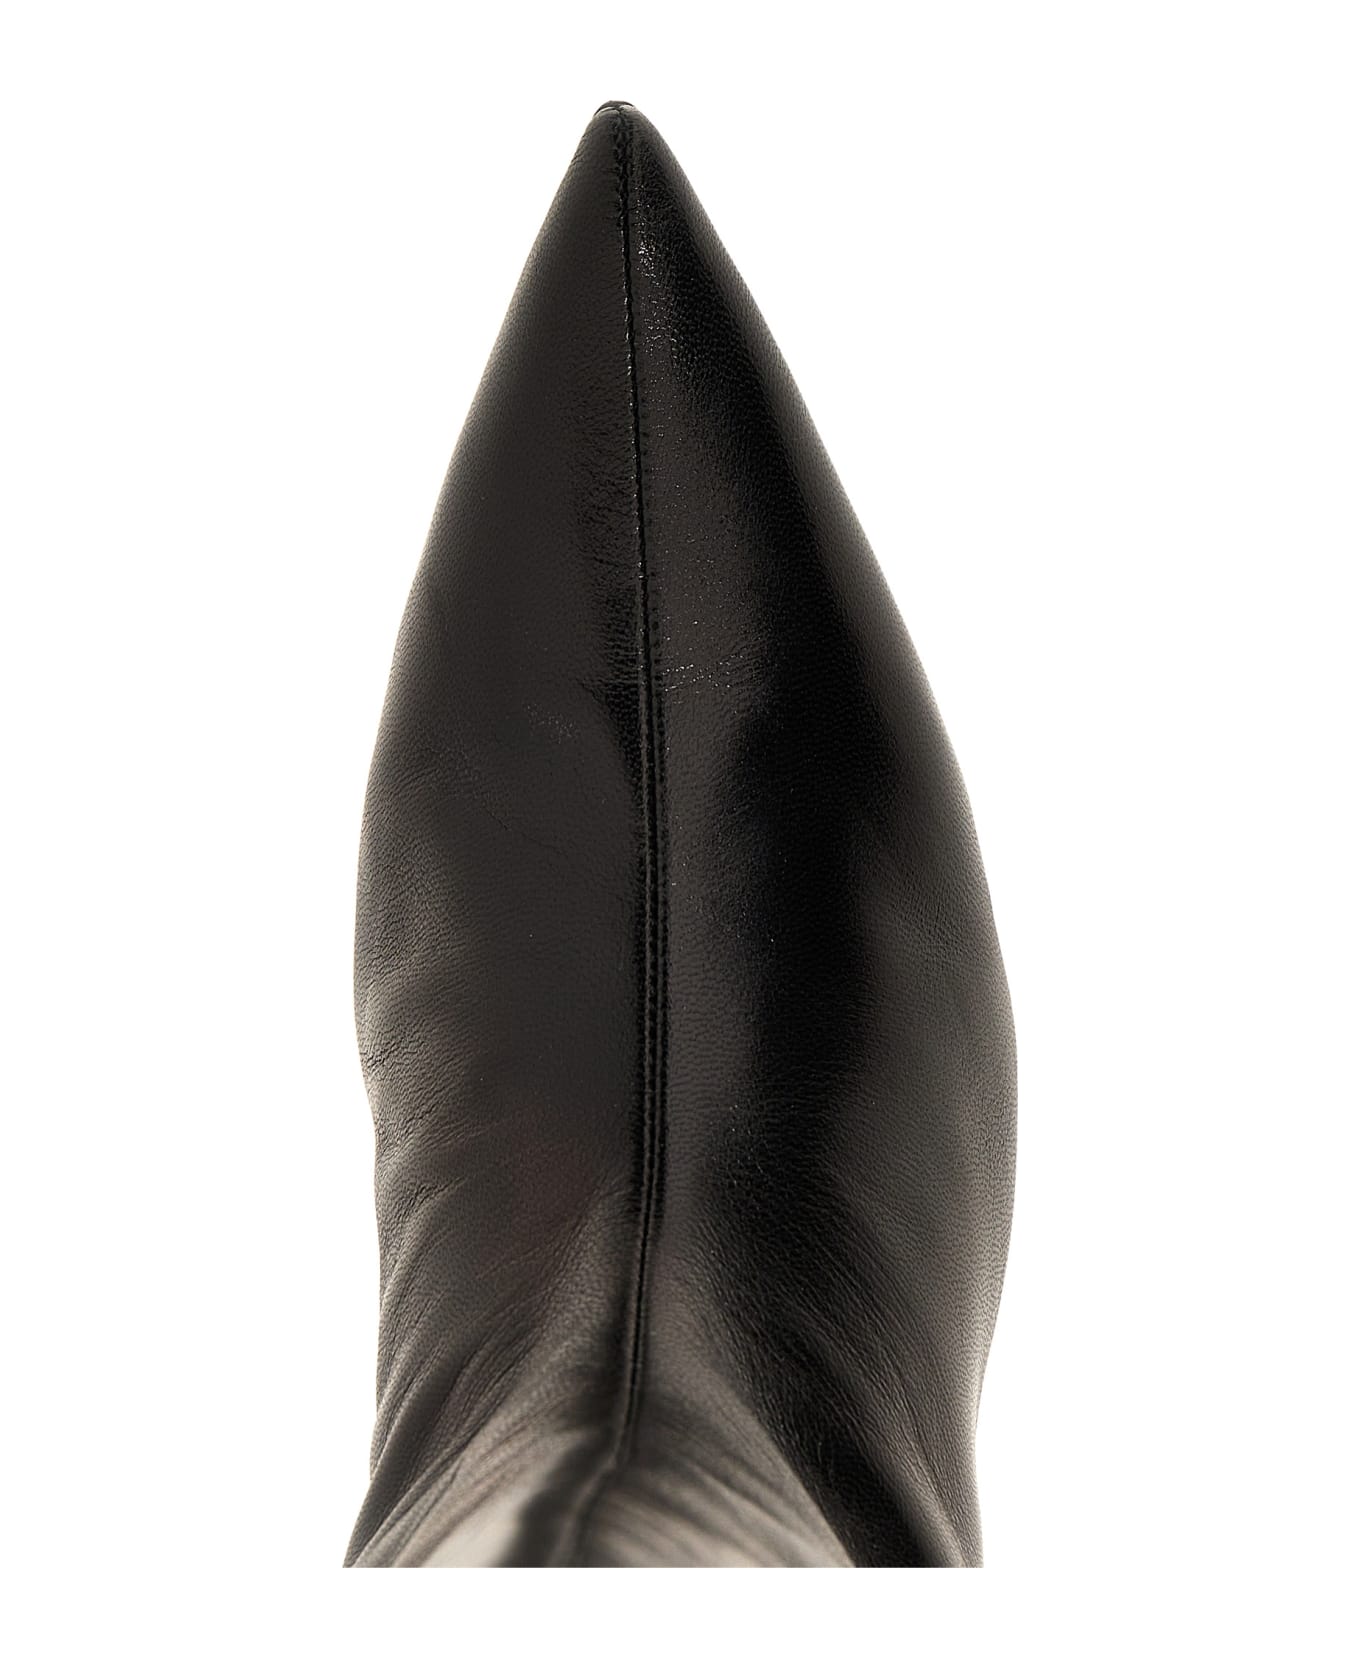 Jil Sander Leather Boots - Black   ブーツ